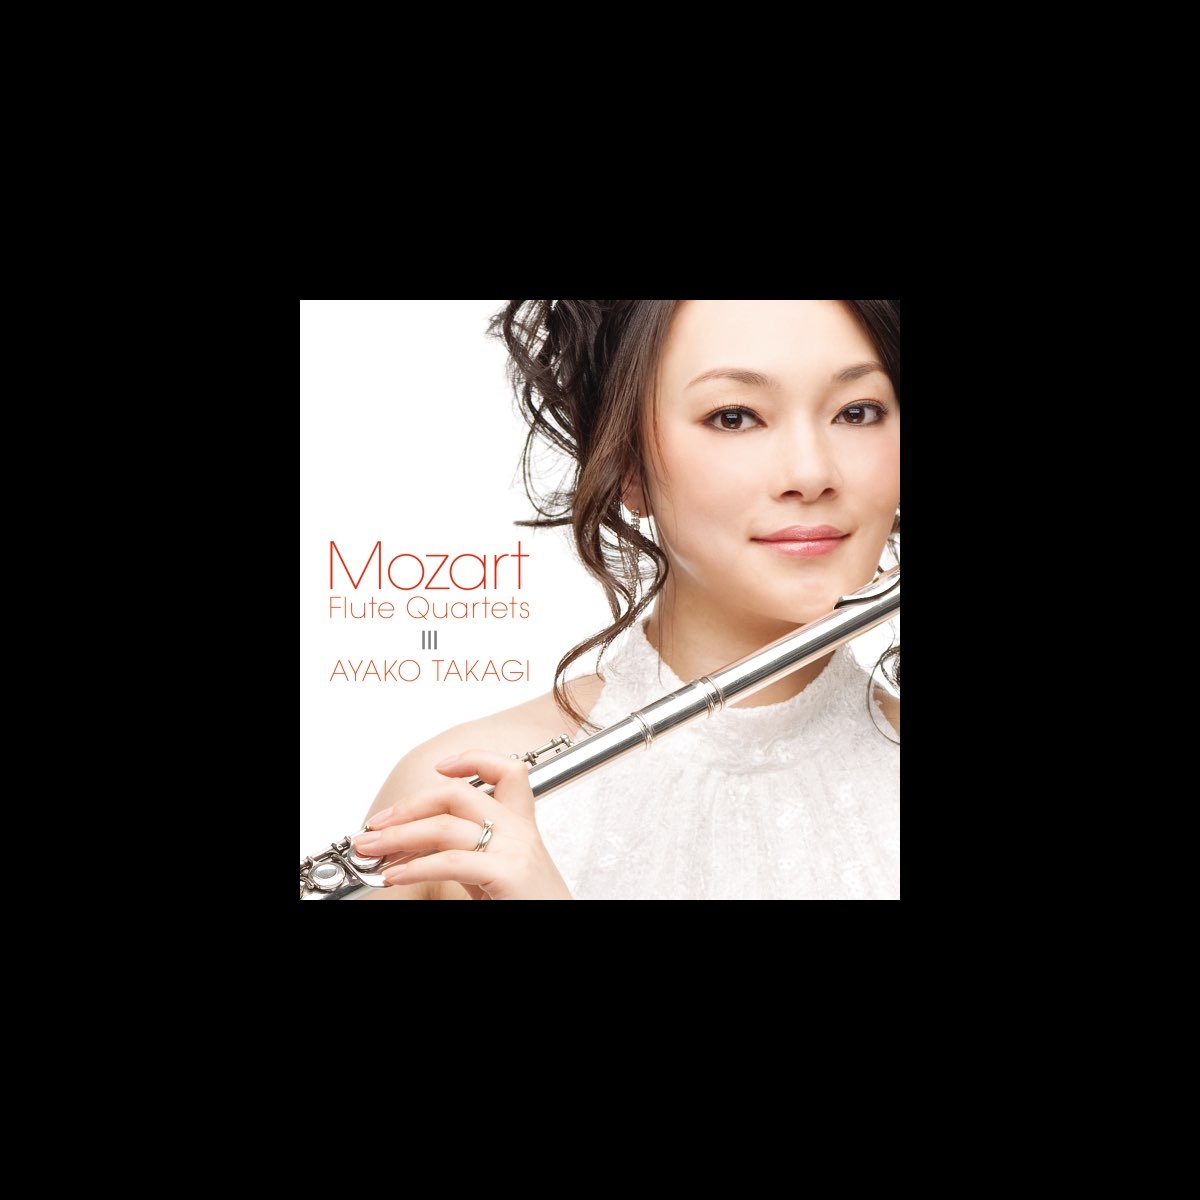 Mozart Flute Quartets By Ayako Takagi On Apple Music